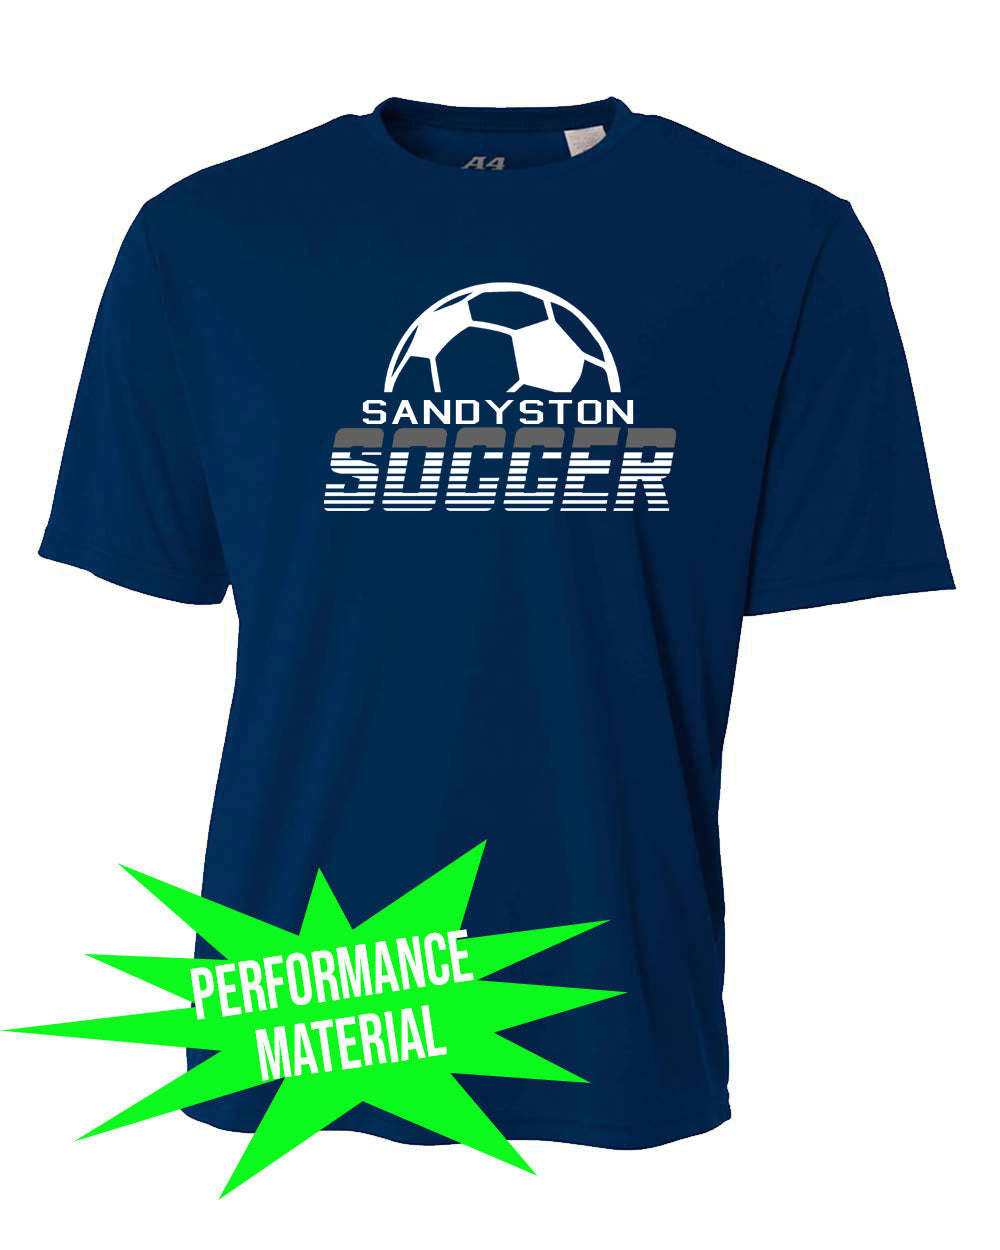 Sandyston Soccer Performance Material design 3 T-Shirt